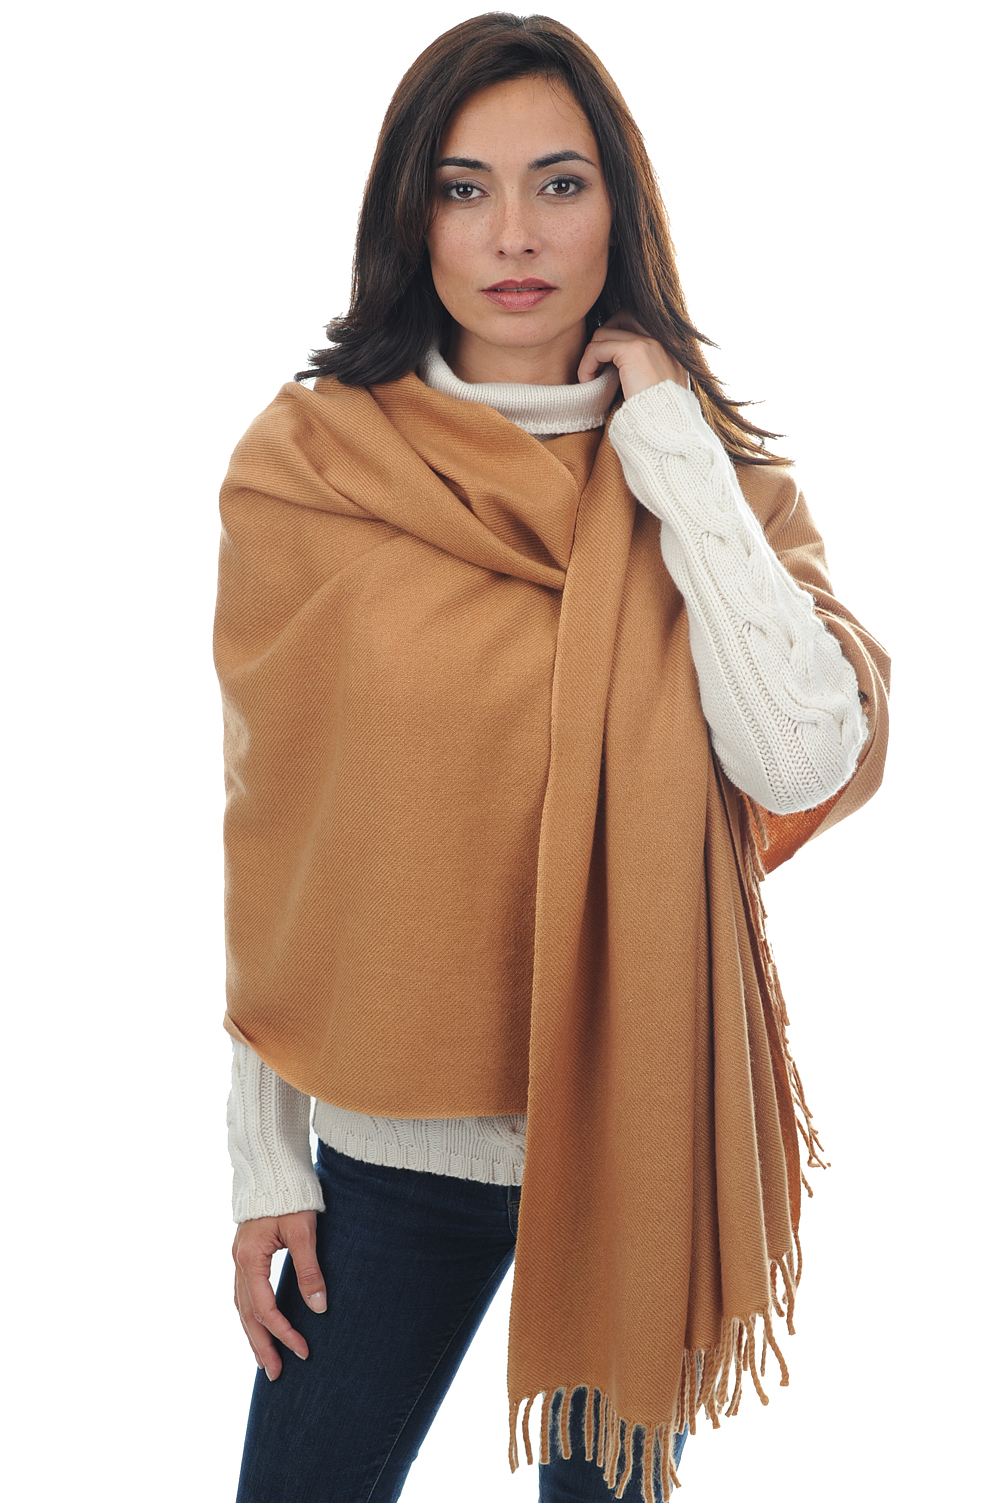 Cashmere accessories scarves mufflers niry camel desert 200x90cm